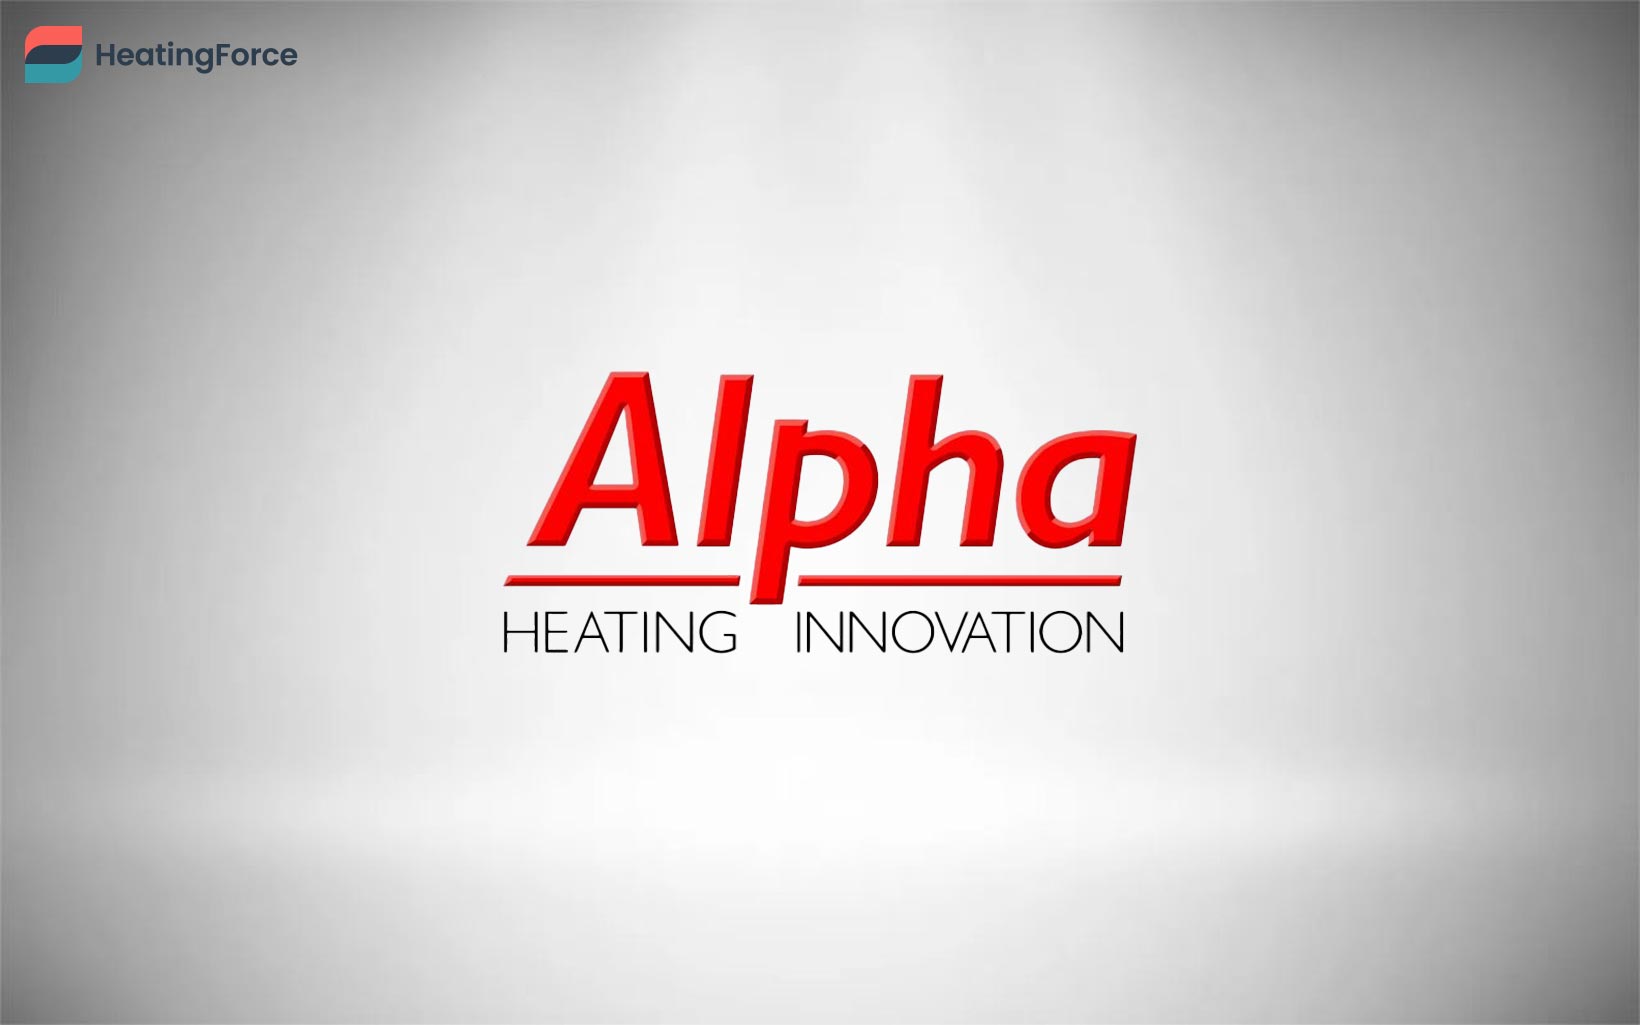 Alpha boilers